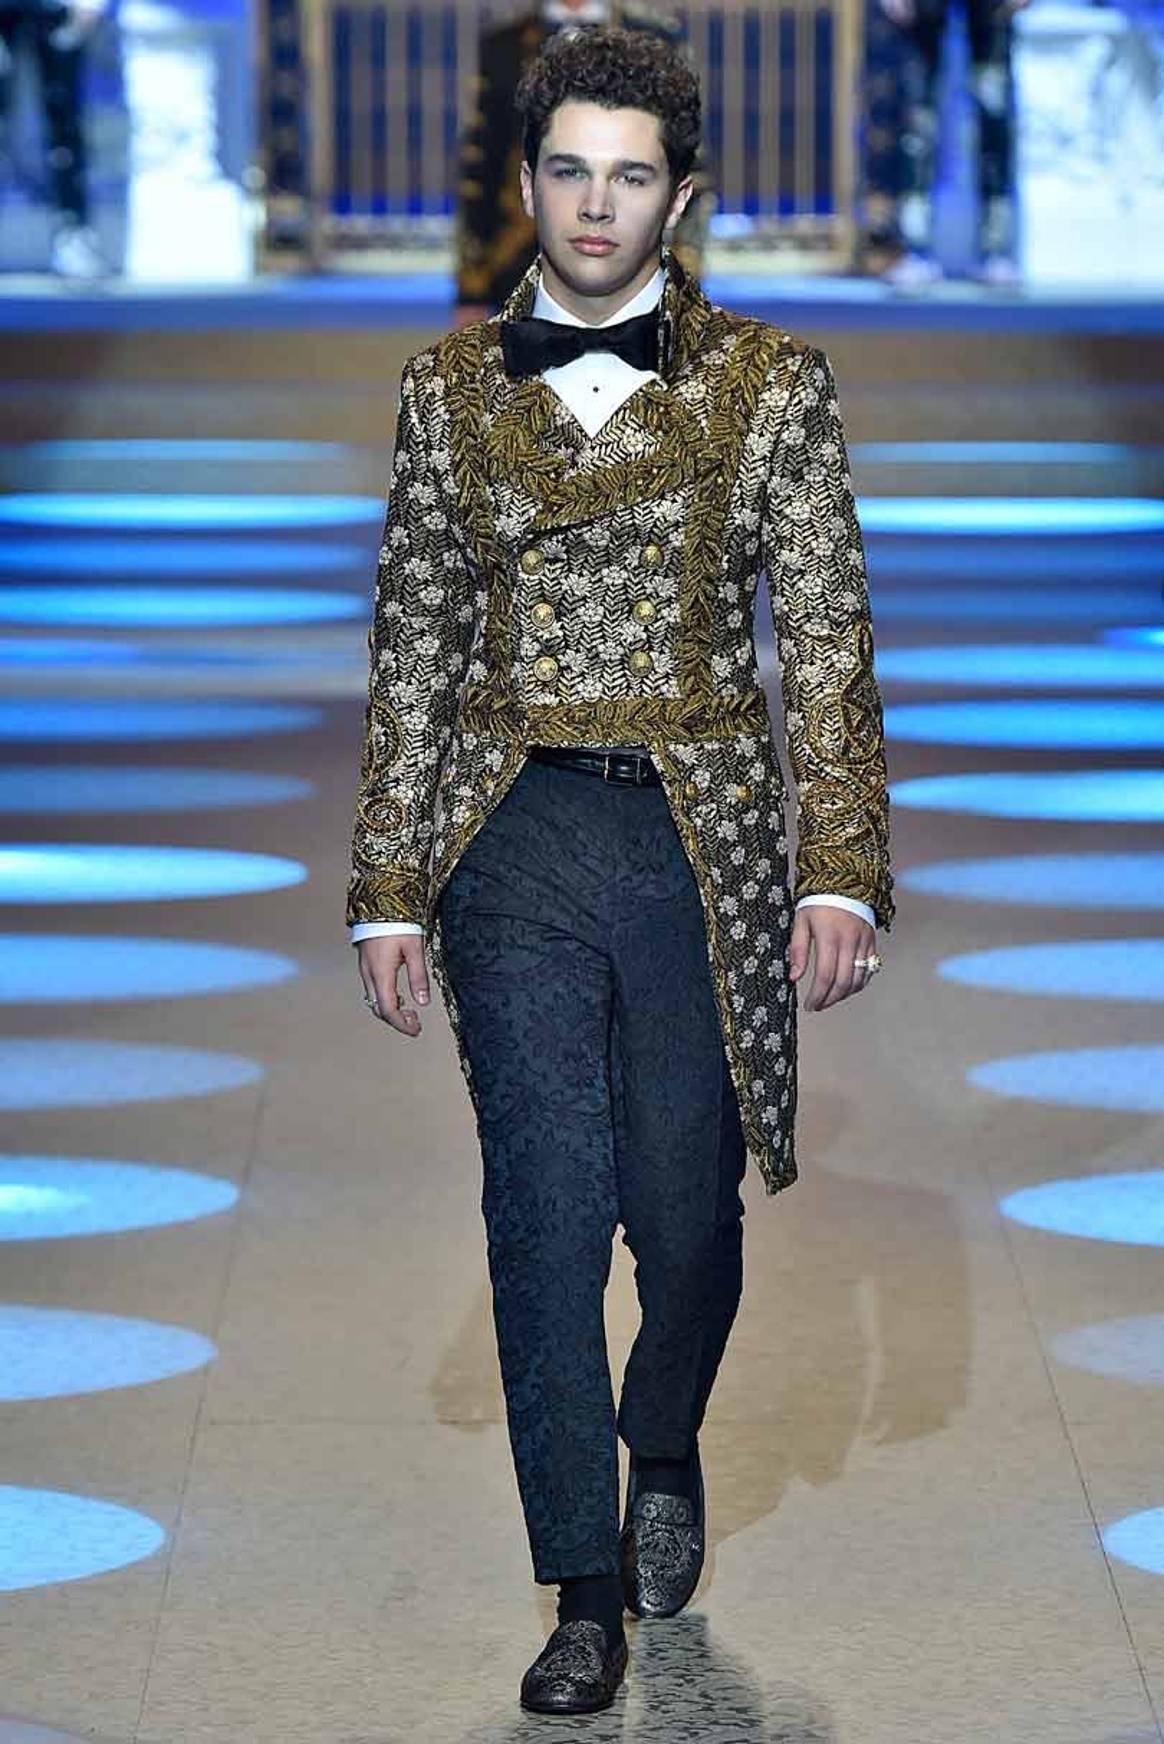 Dolce & Gabbana's royal flush wows Milan Fashion Week